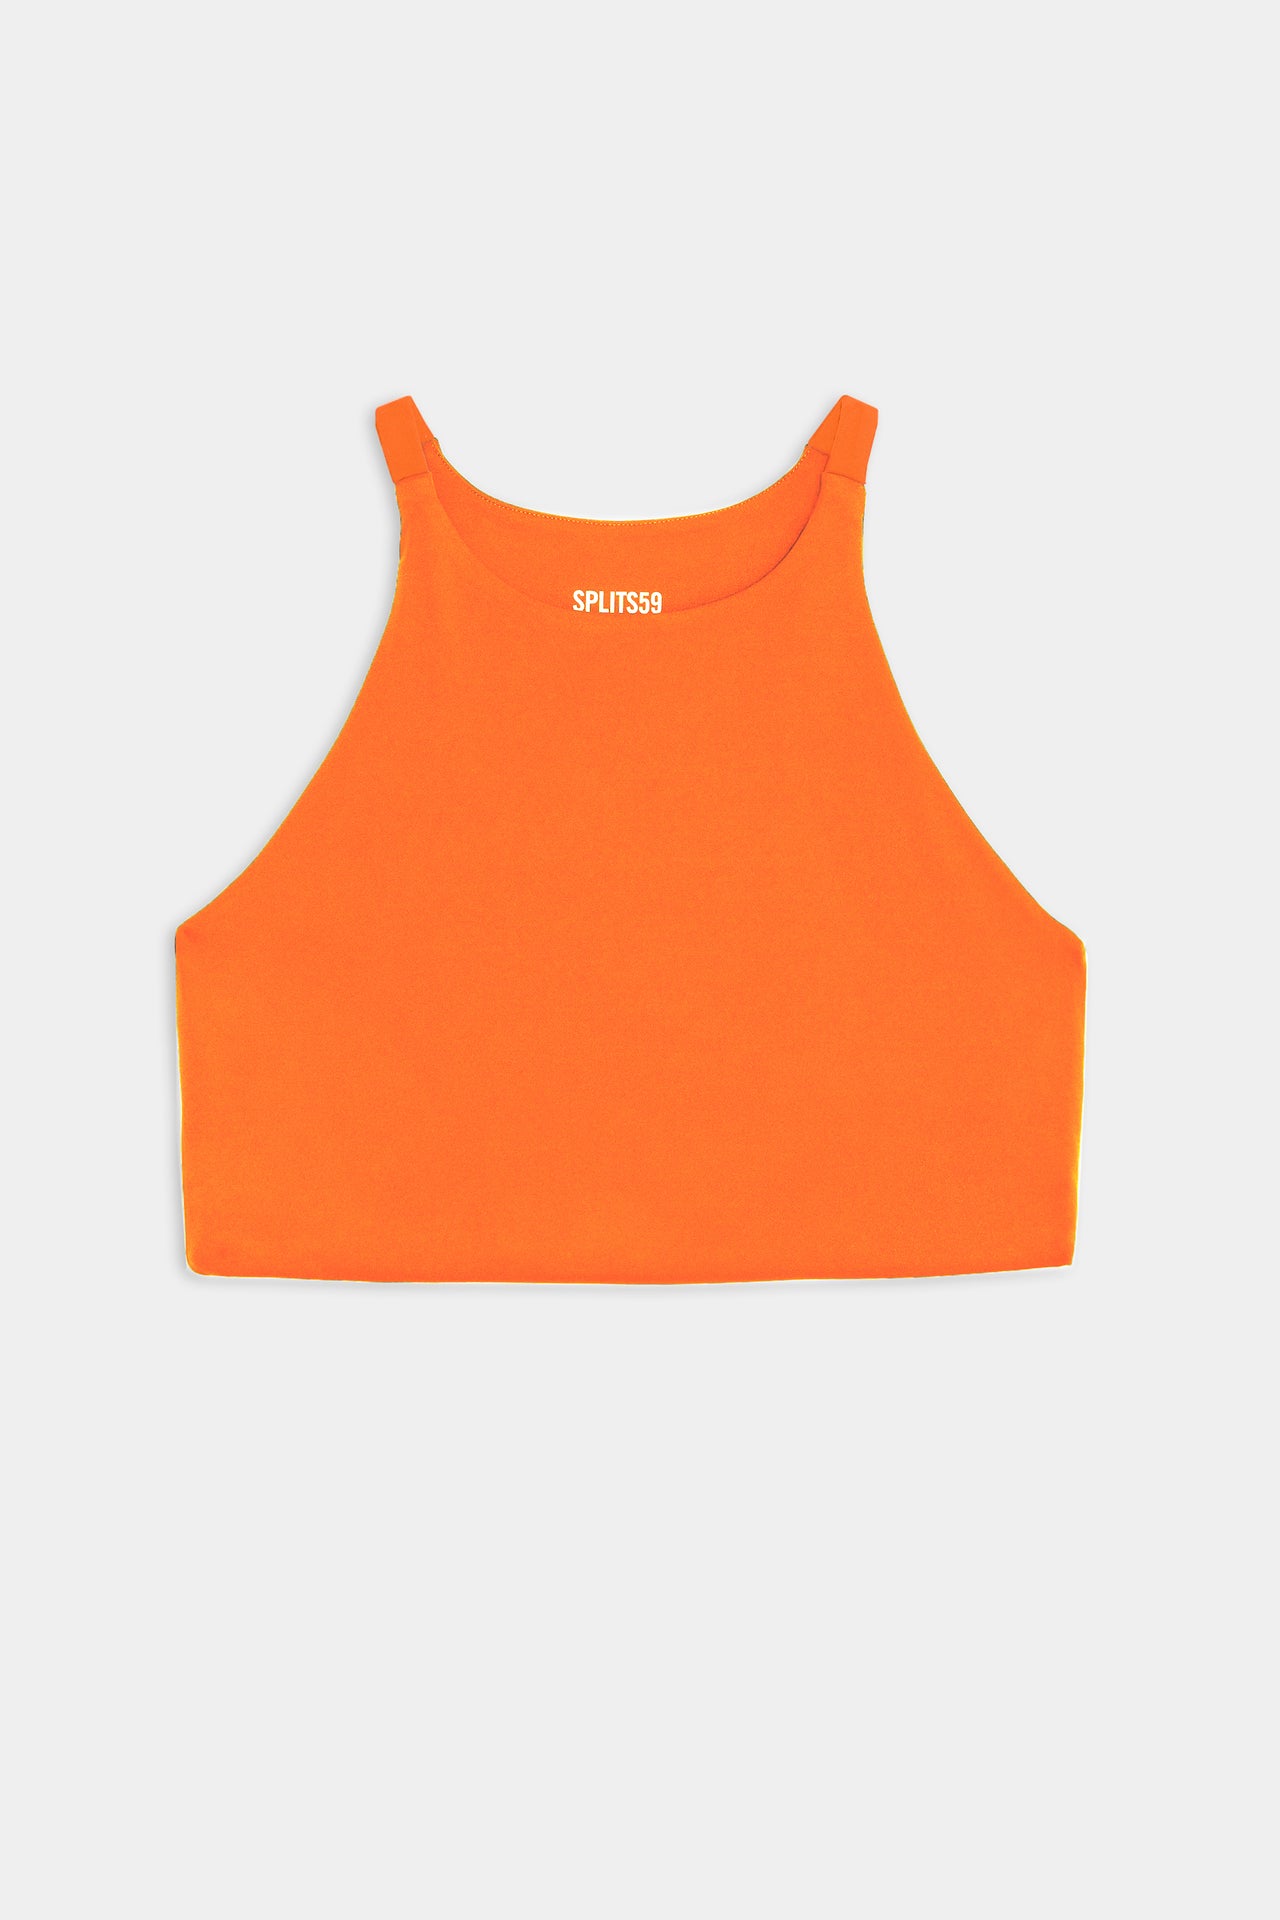 Flat view of orange sports bra that stops at collarbone